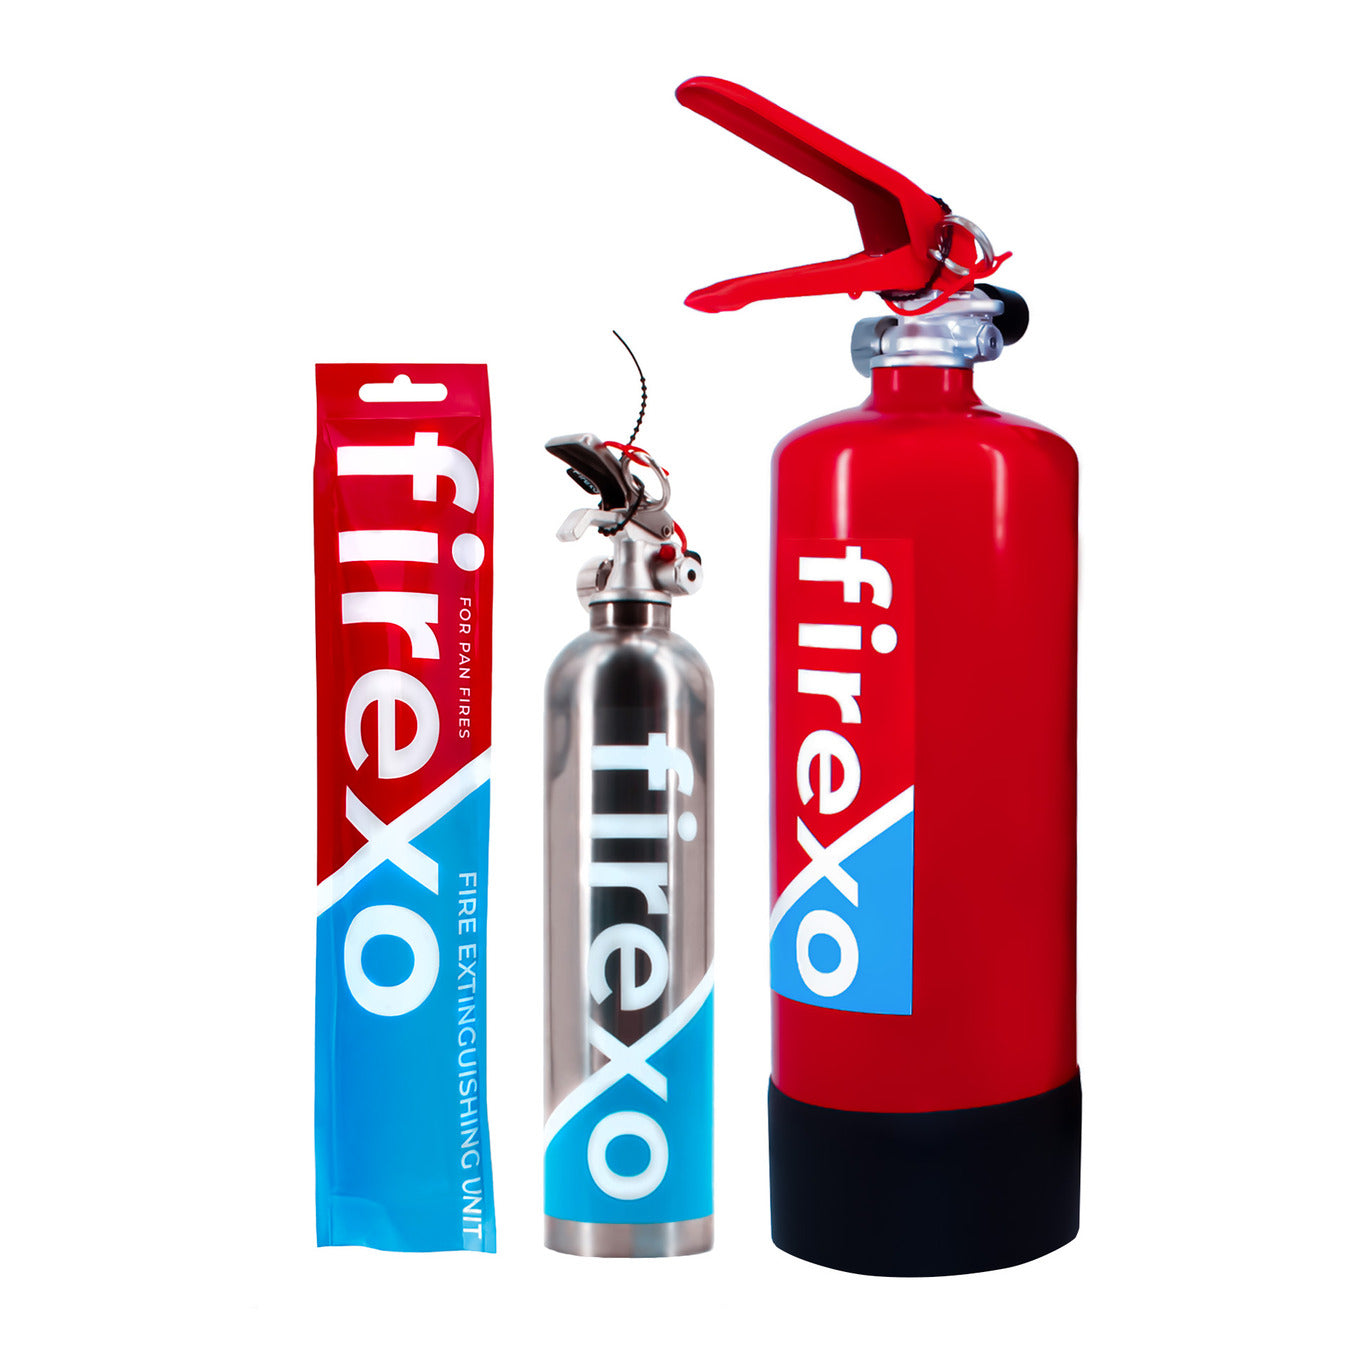 2 Litre, 500ml and Firexo Pan Fire Sachet Fire Extinguishing Pack